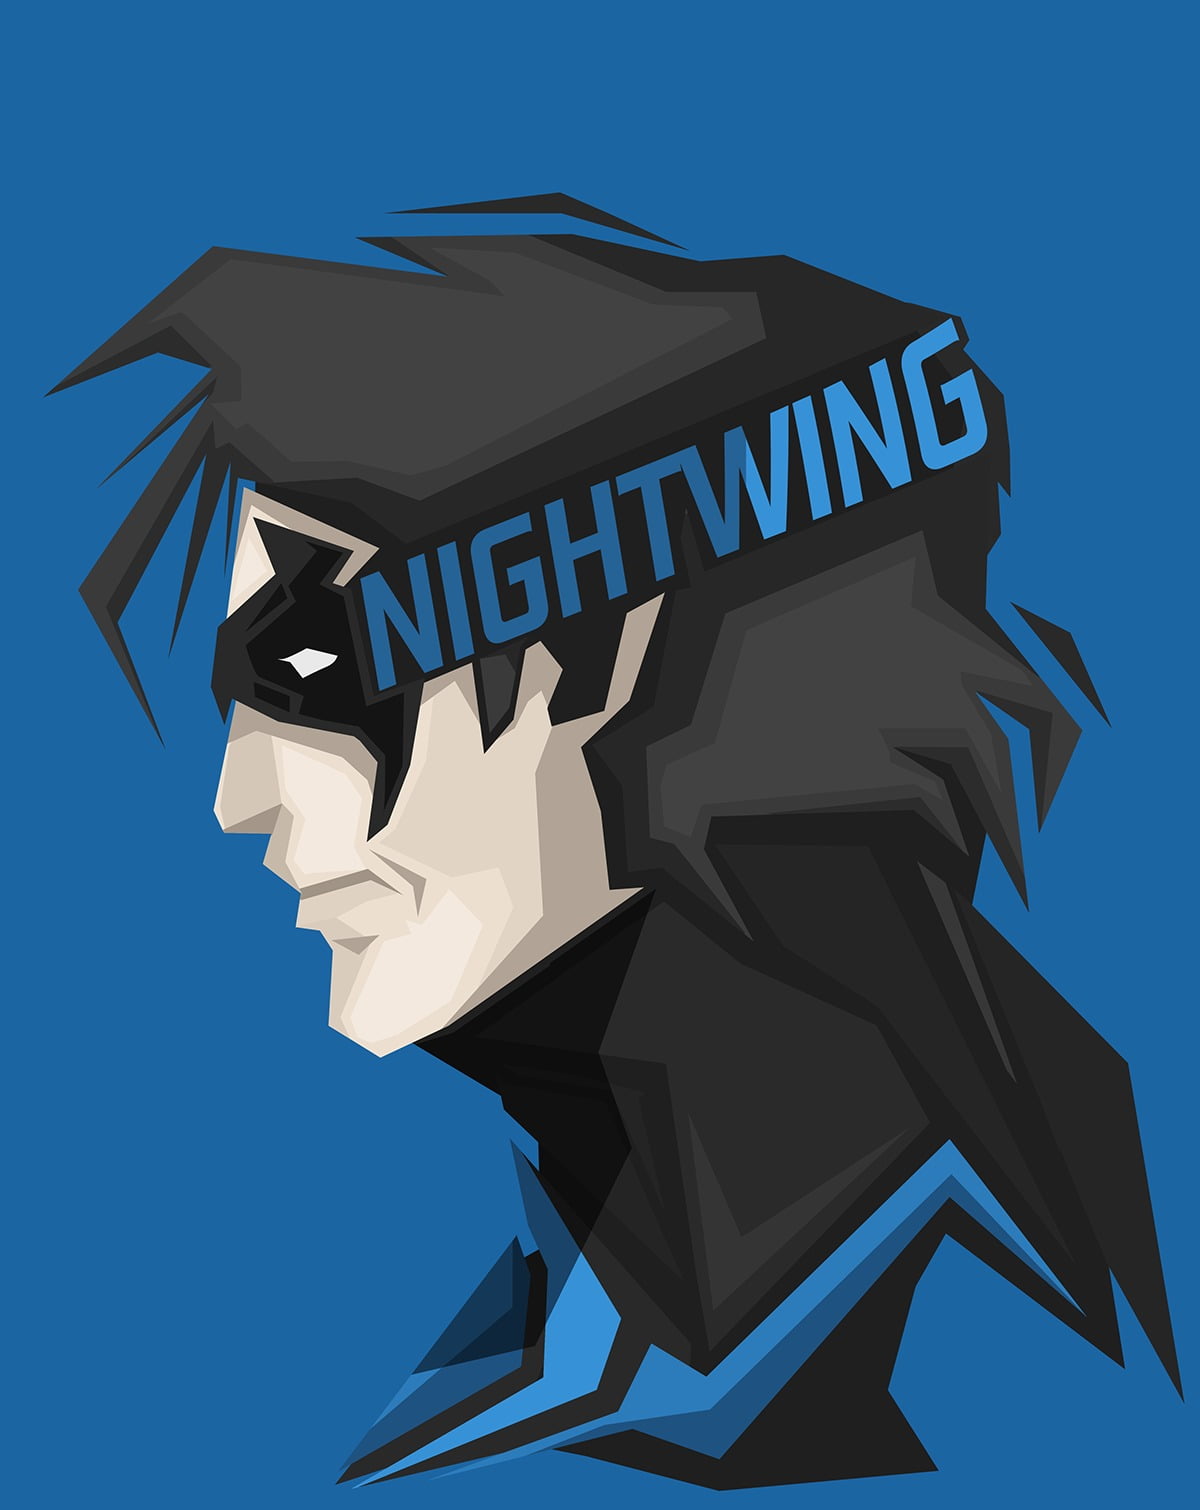 Nightwing digital wallpaper, DC Comics, blue background, business